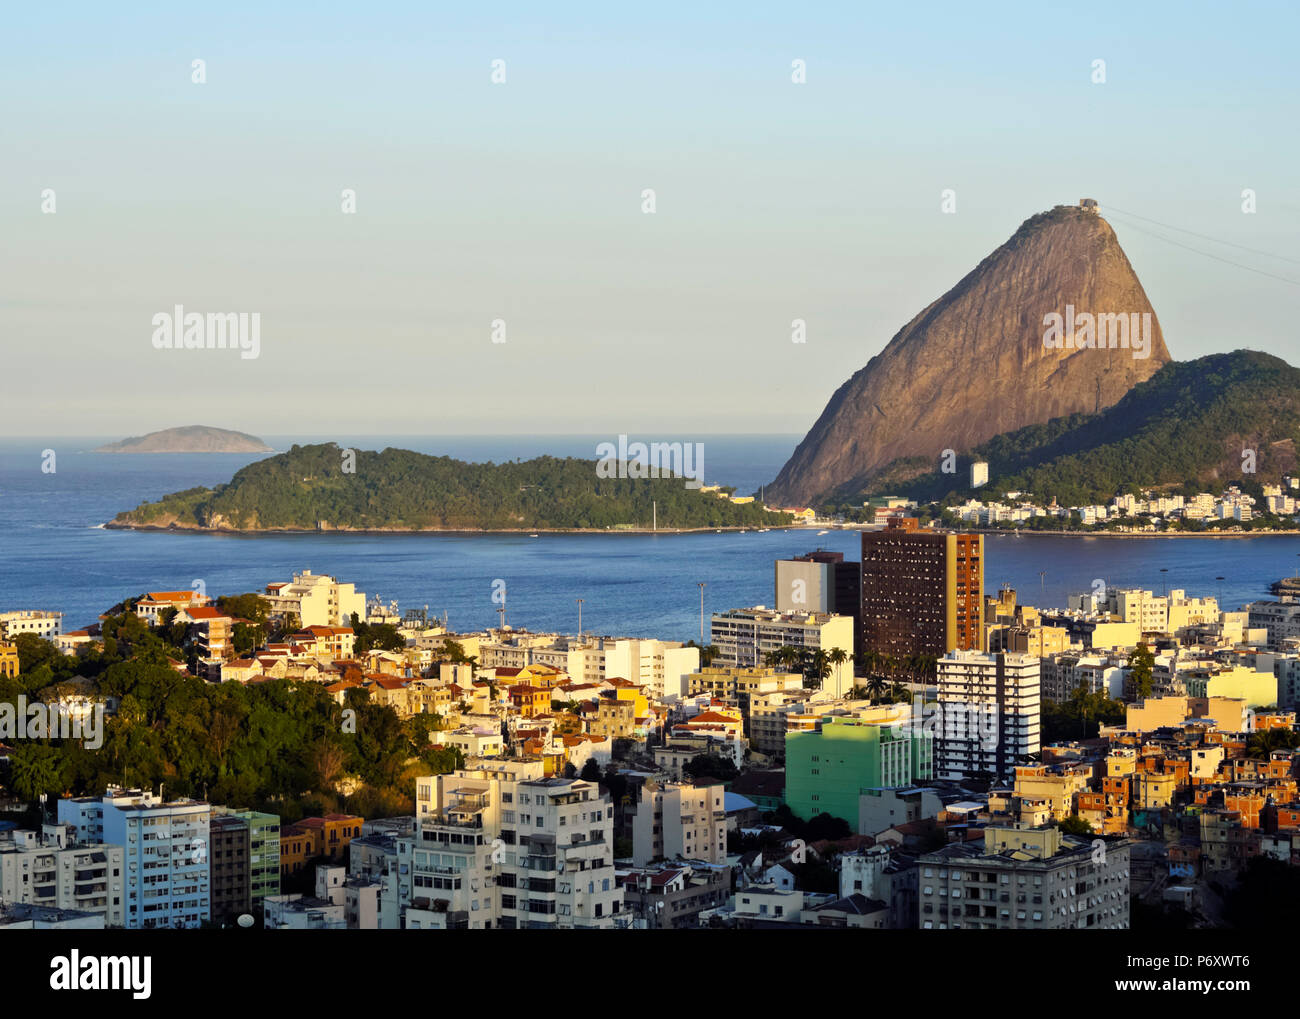 Brésil, Rio de Janeiro, quartier de Santa Teresa, vue sur Catete et Flamengo vers Sugarloaf Mountain de Parque das ruinas. Banque D'Images